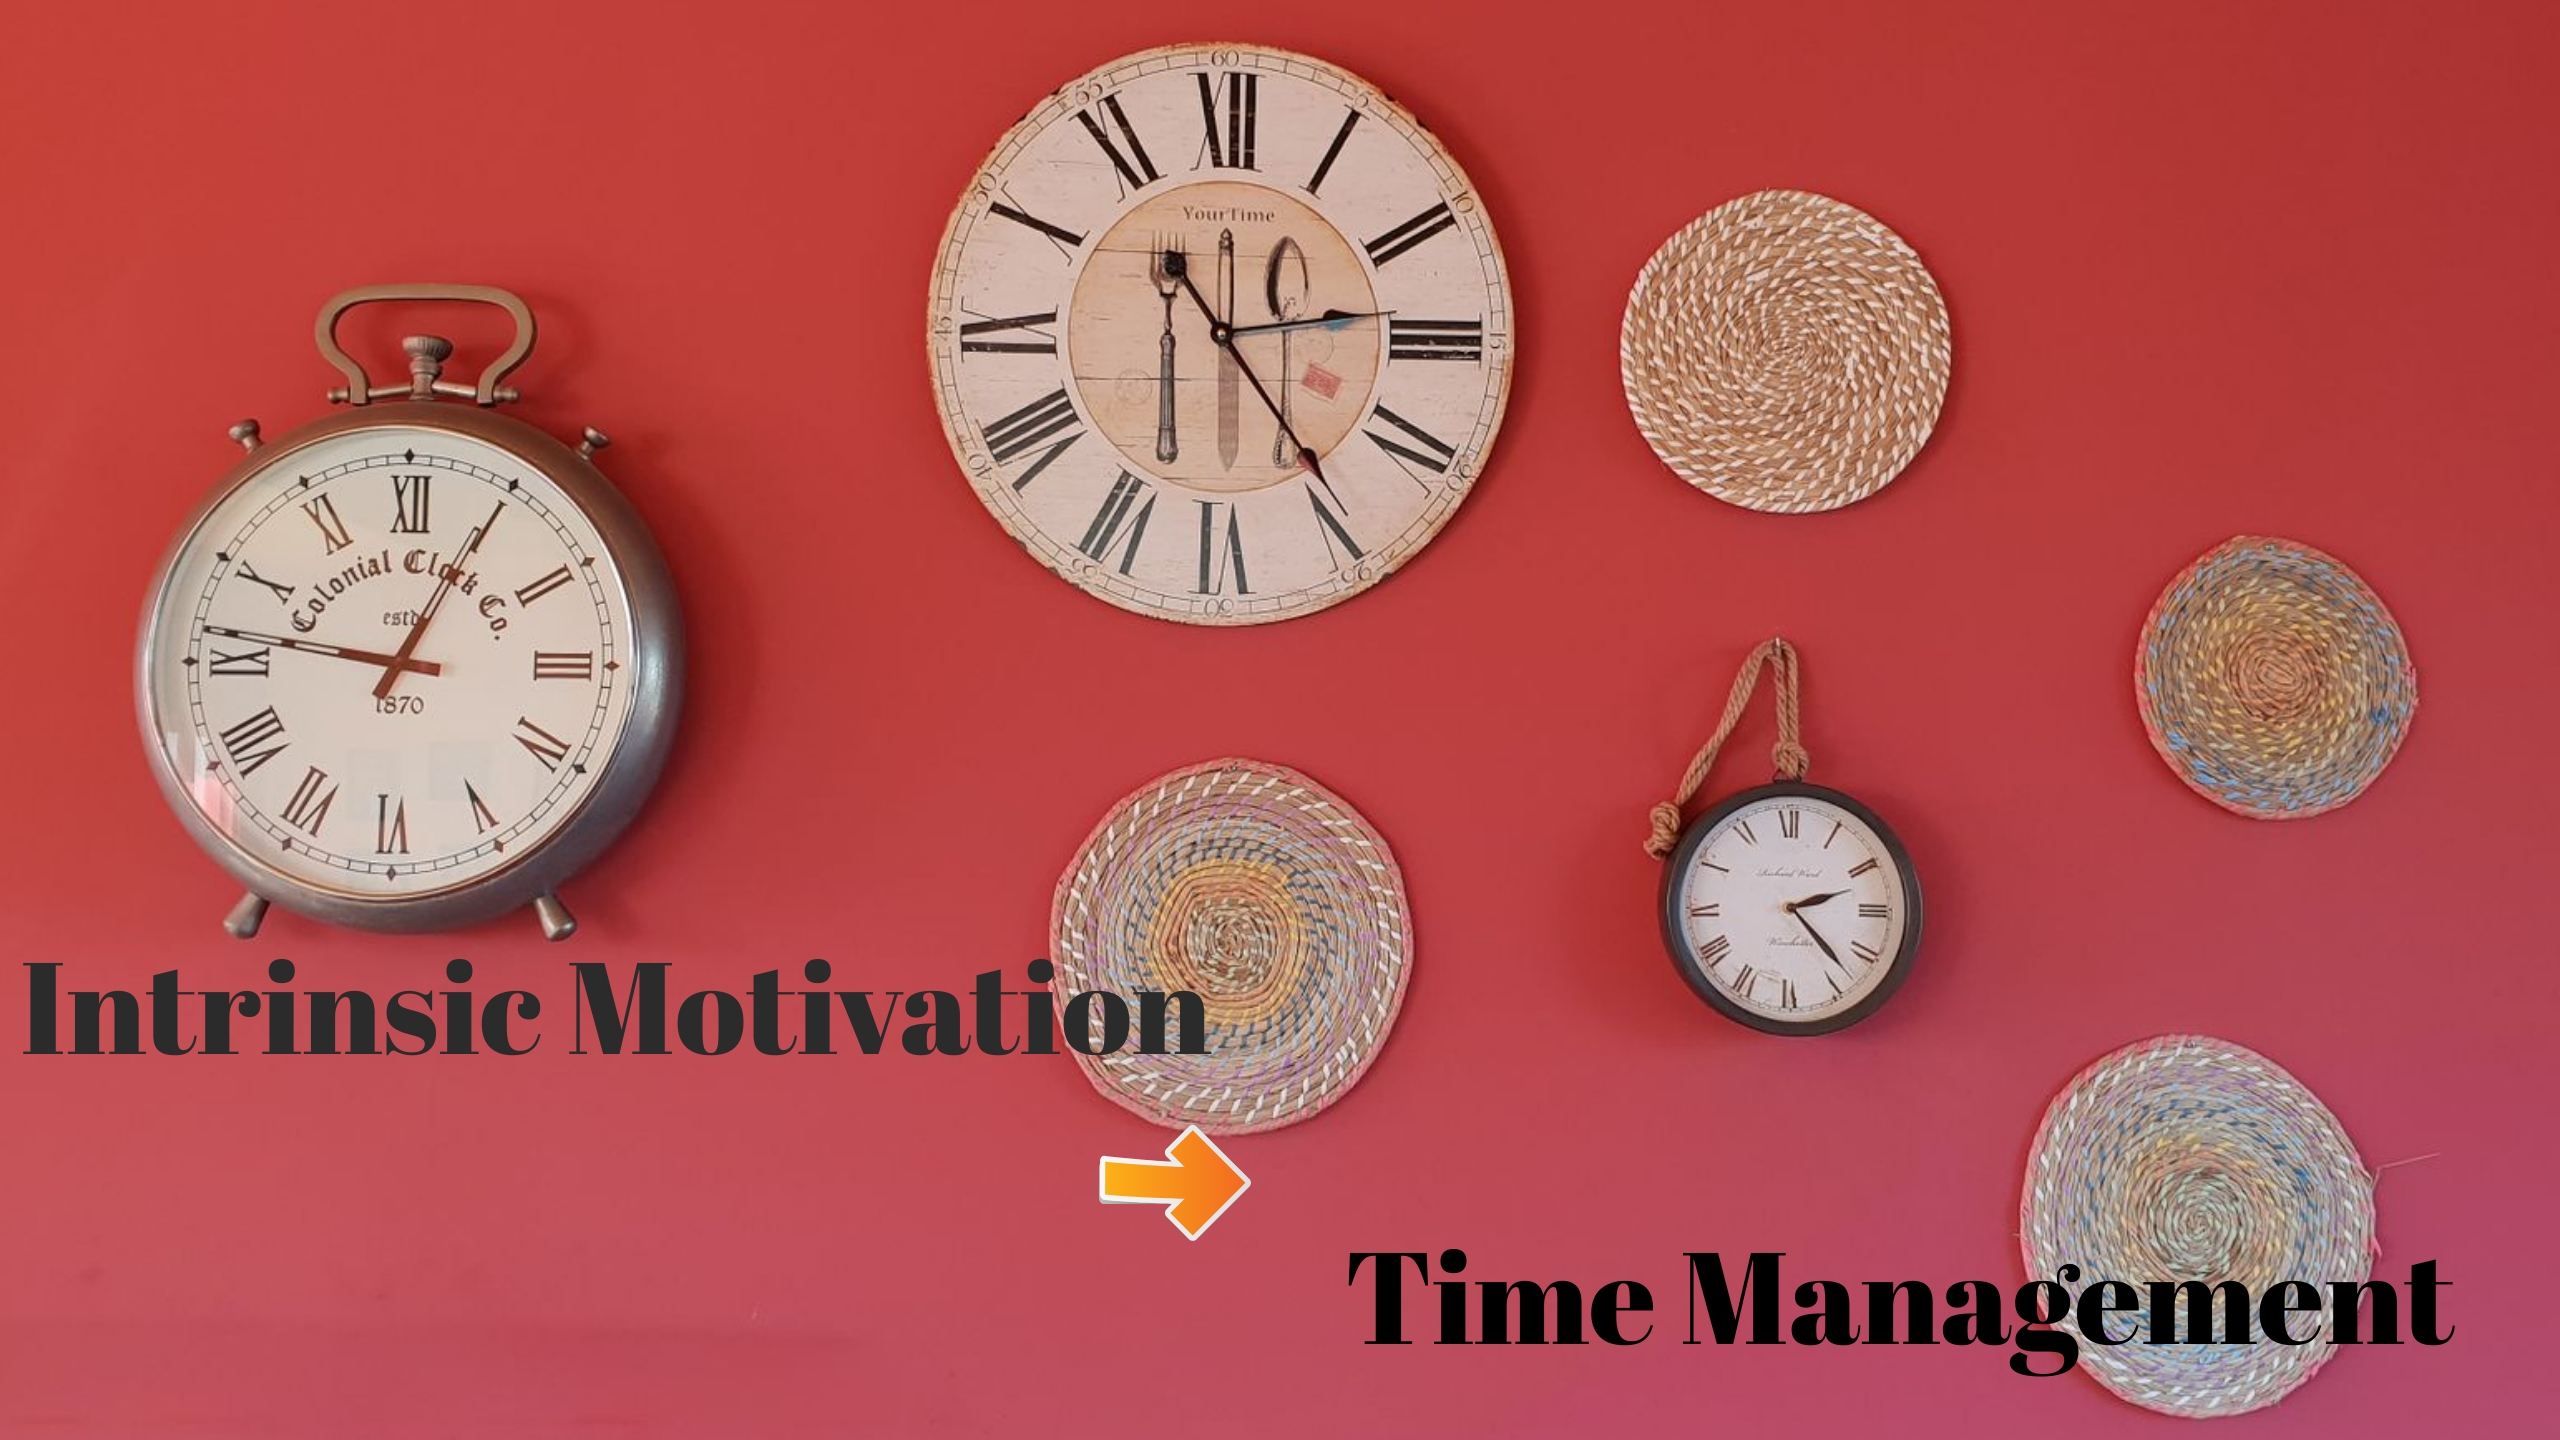 Define Intrinsic Motivation to Manage Time